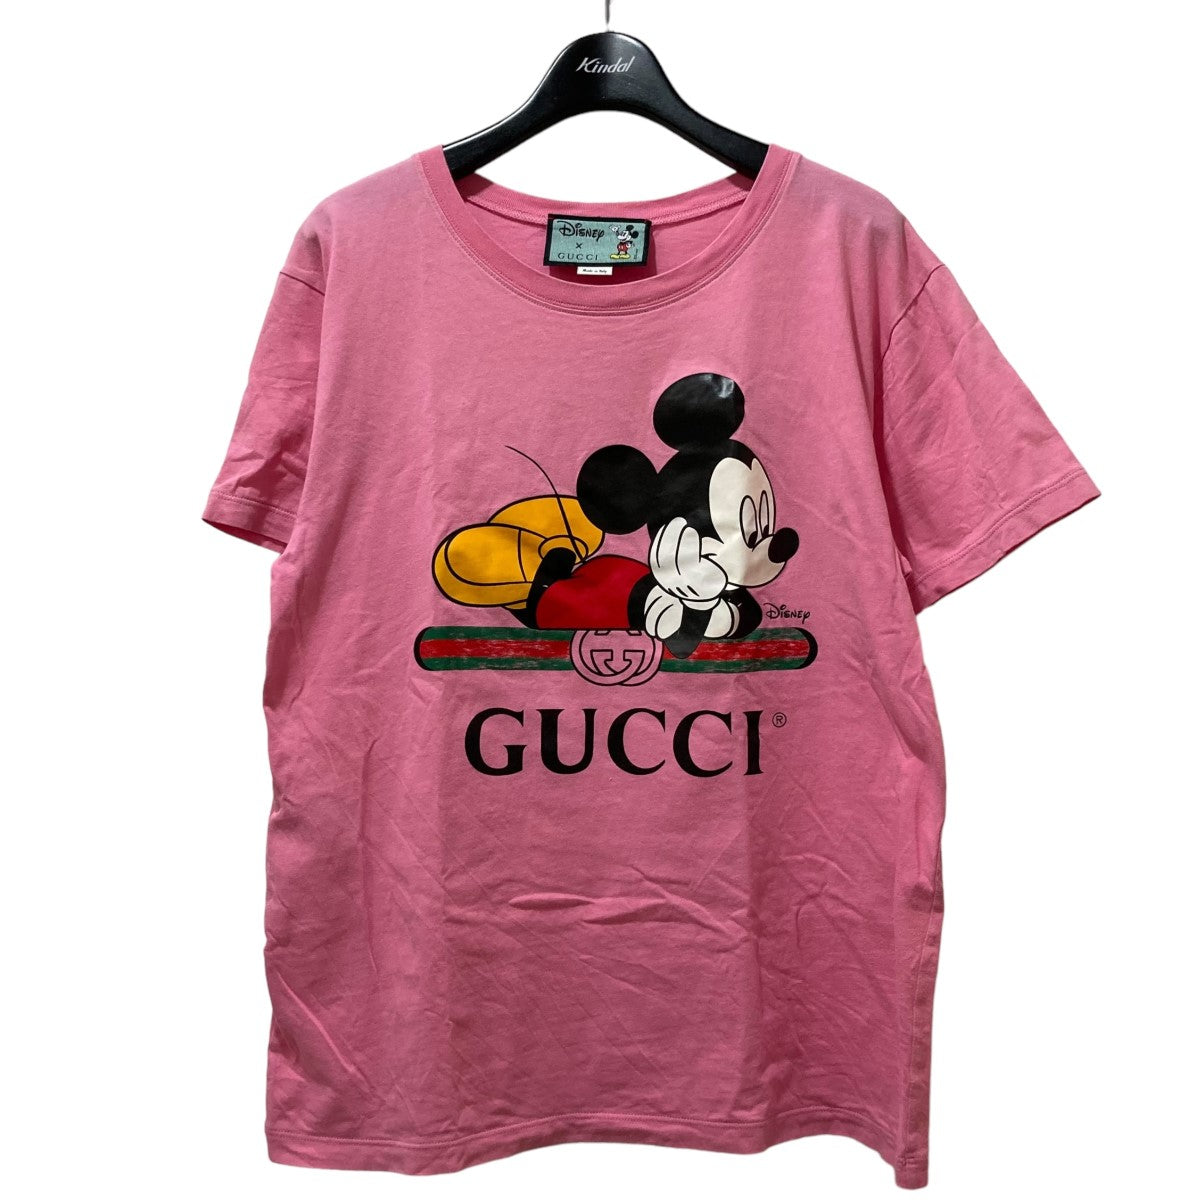 GUCCI(グッチ) ×DISNEY ロゴミッキーTシャツ 492347 492347 ピンク 